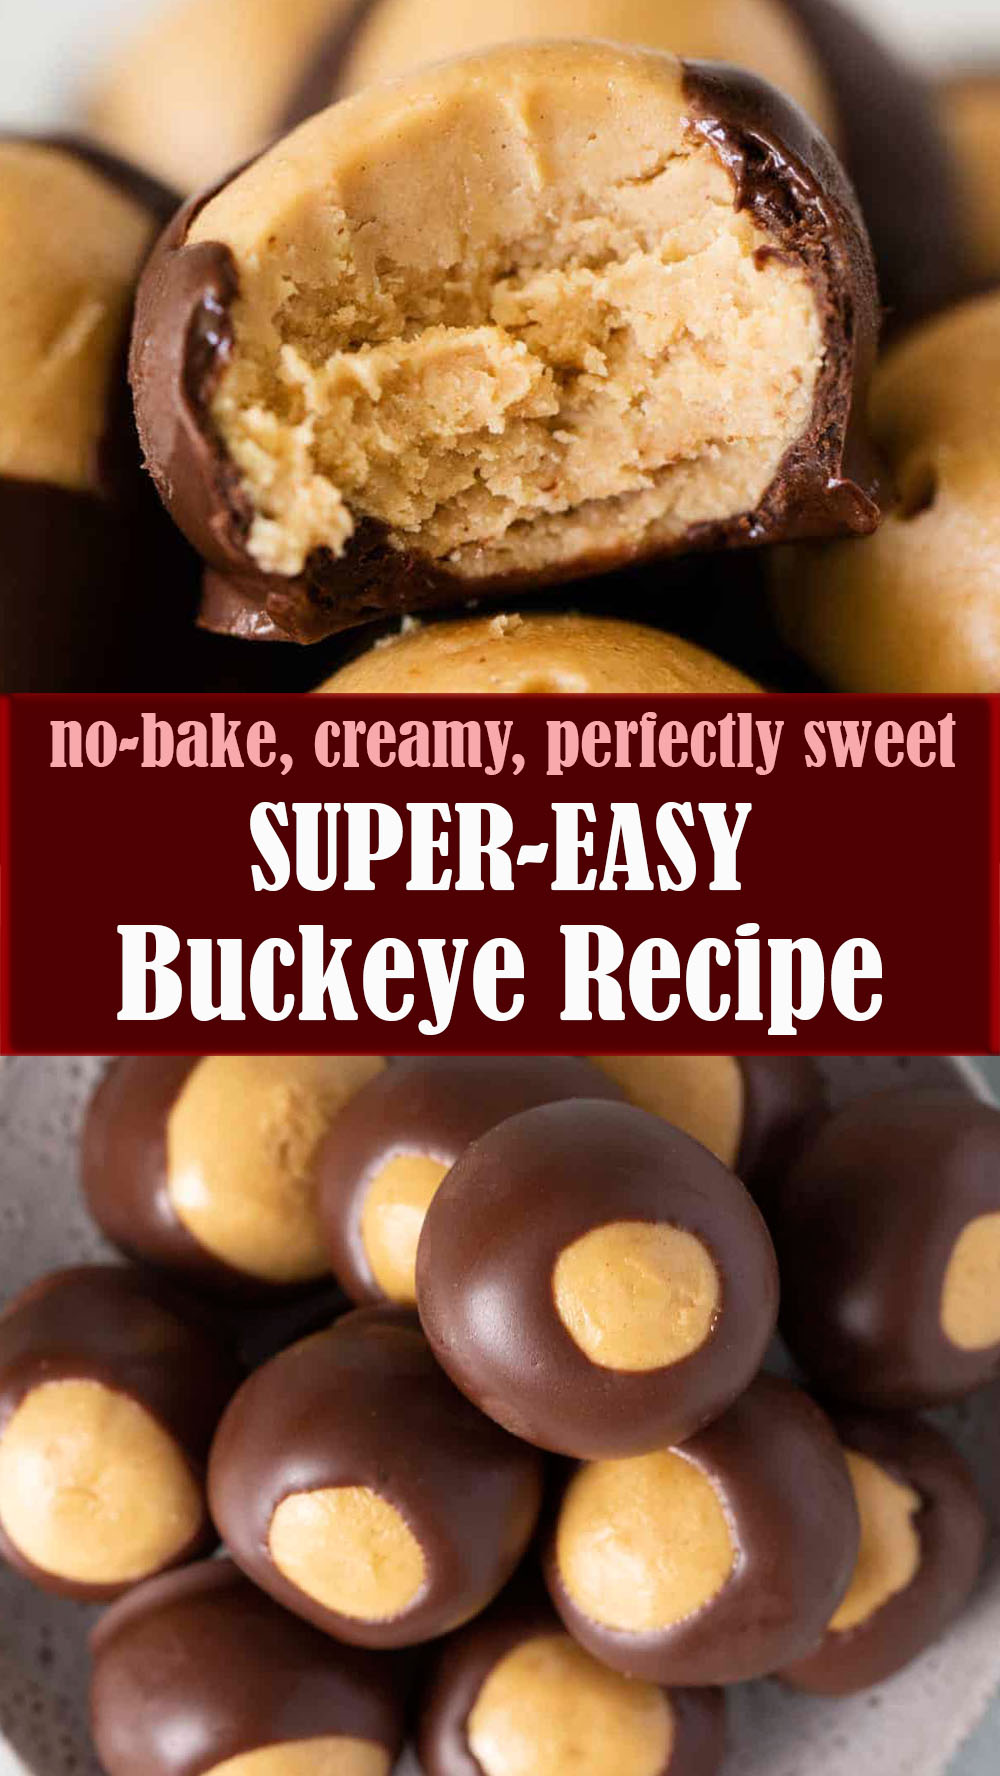 SUPER-EASY Buckeye Recipe